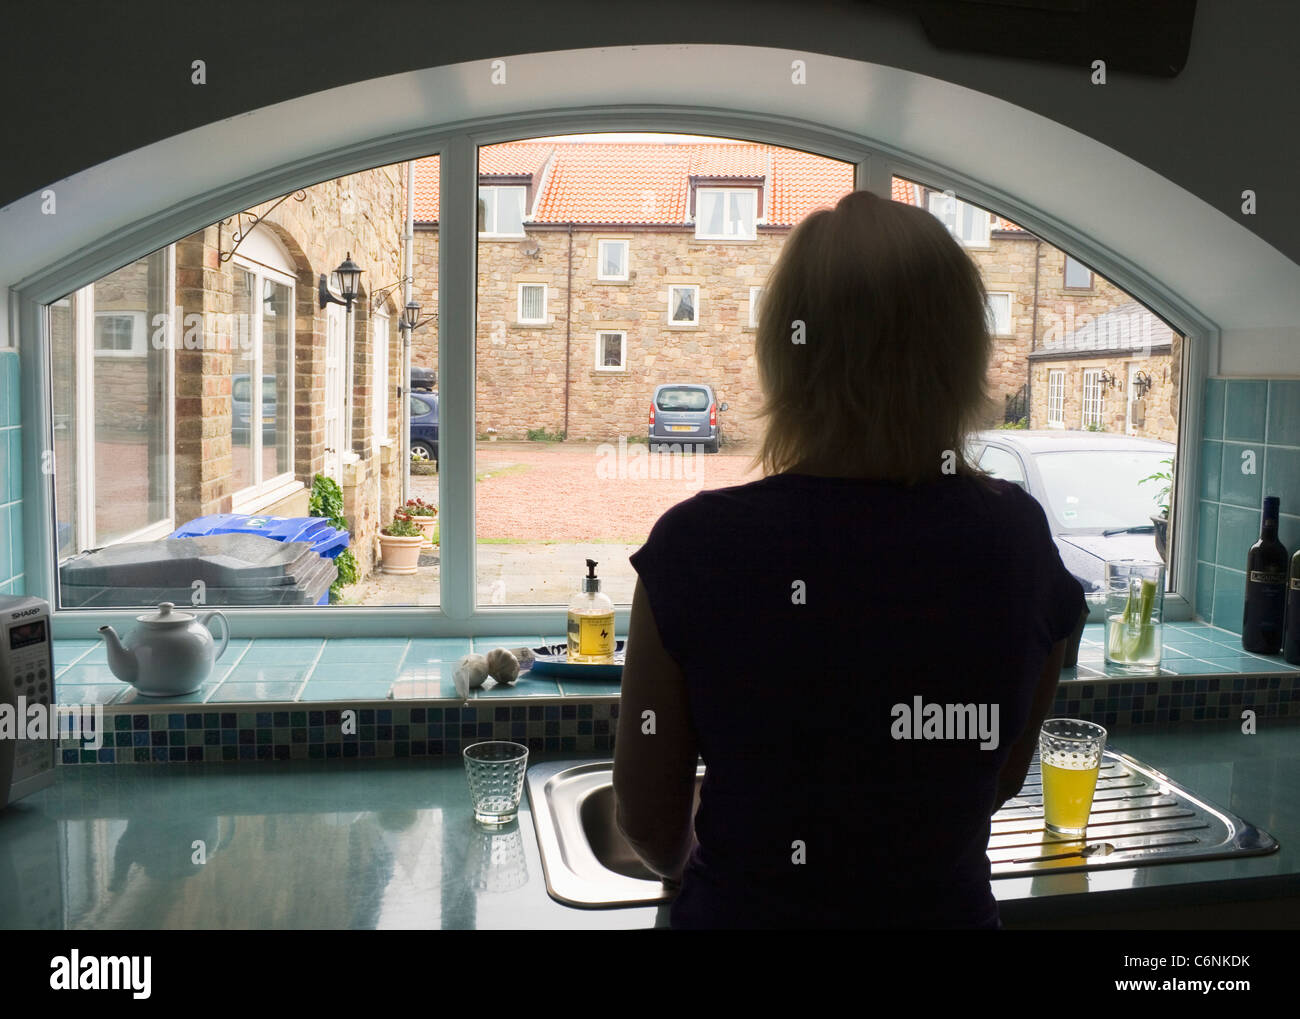 Silhouette of woman stood at kitchen window. Stock Photo